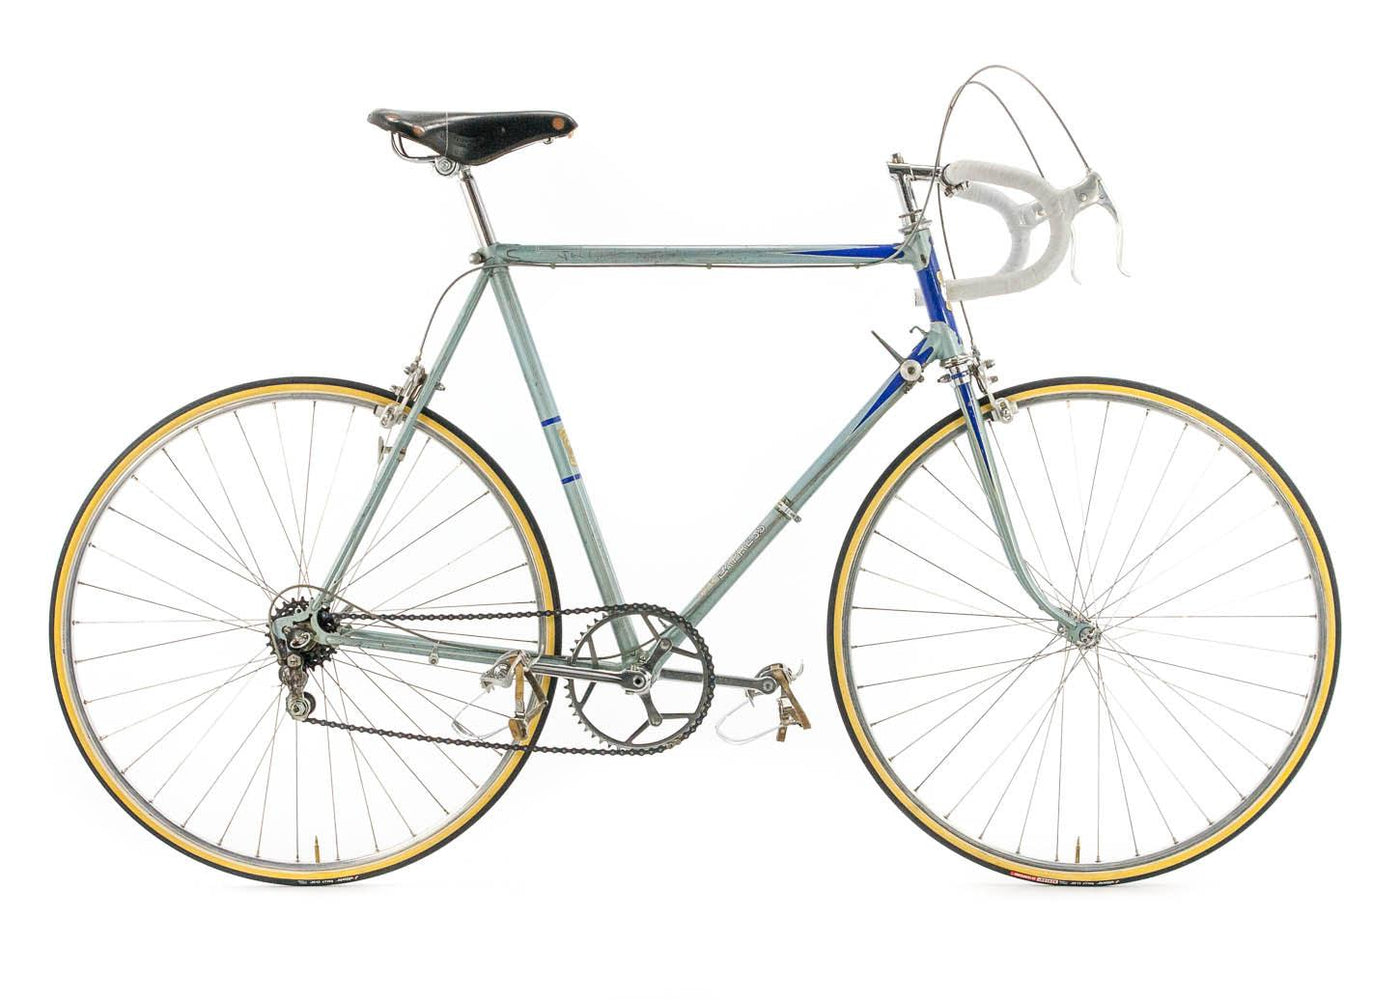 Expresswerke Berufsfahrer Classic Road Bike 1950s - Steel Vintage Bikes